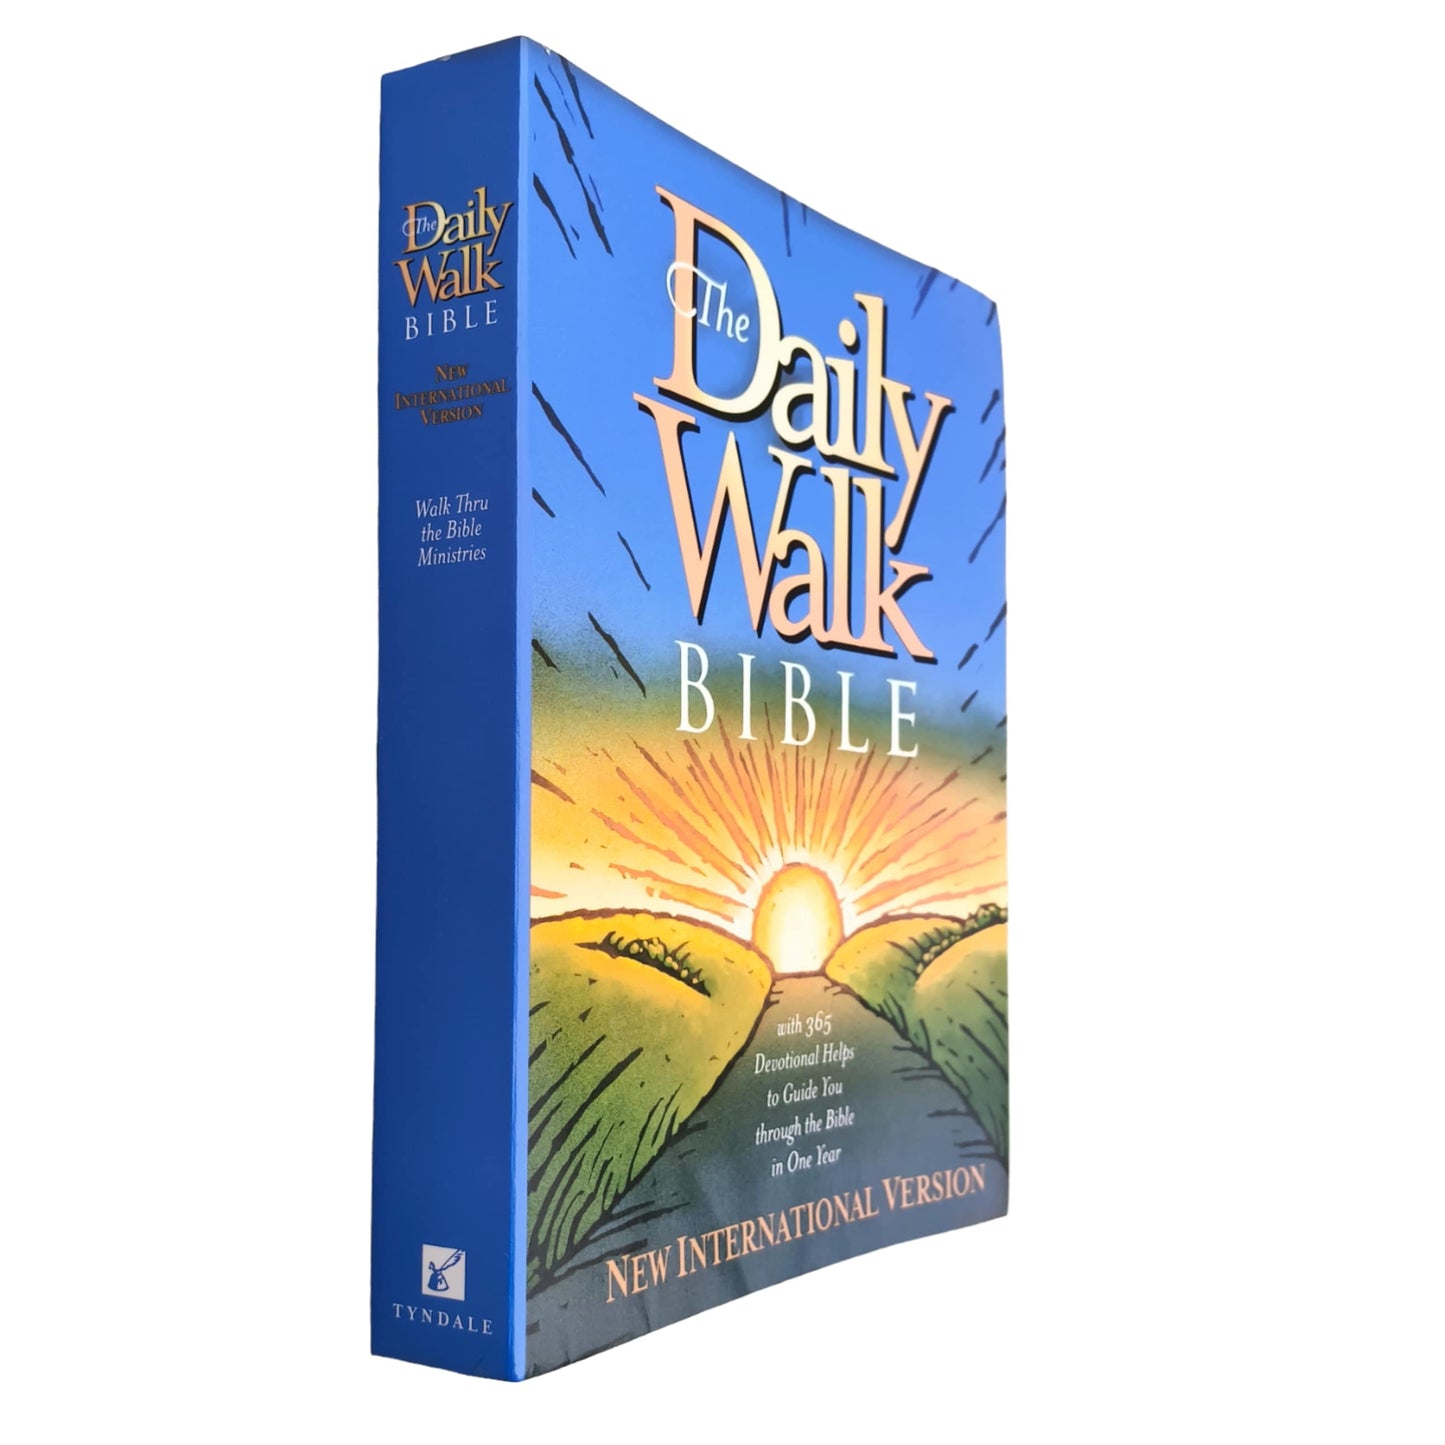 Daily Walk Bible NIV Version